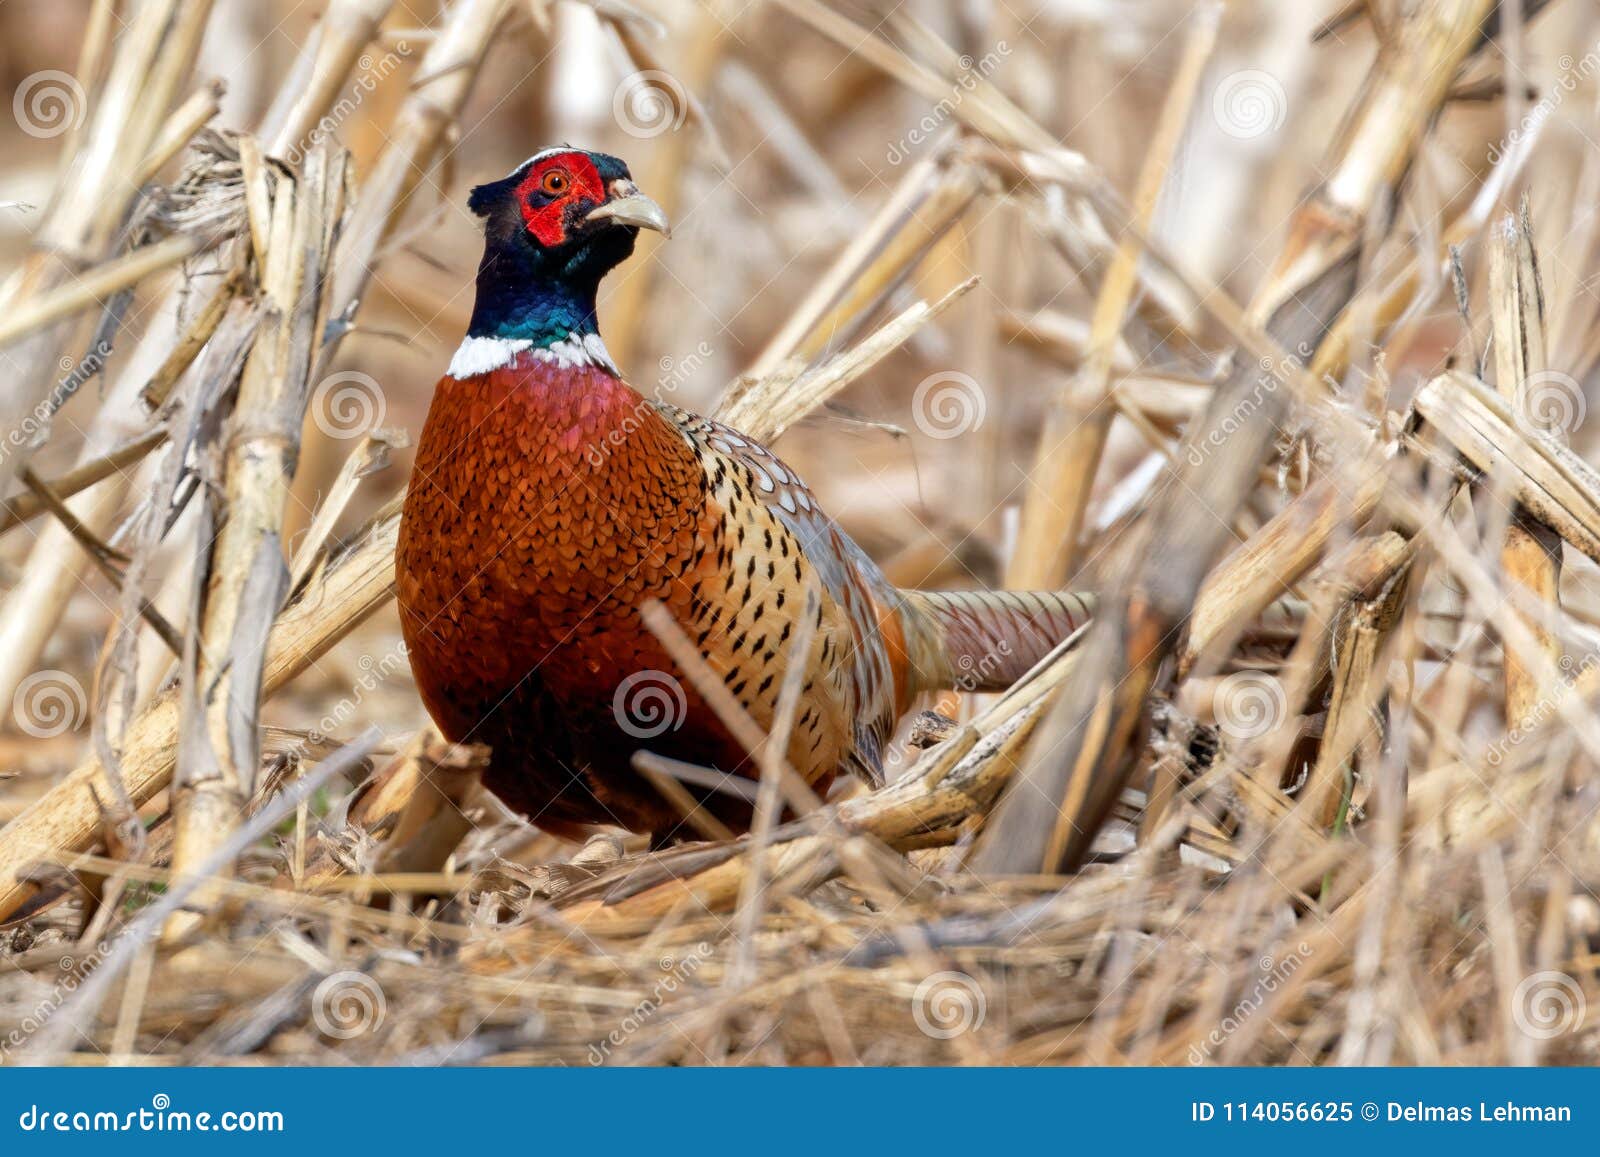 ring-necked pheasant in natural habitat